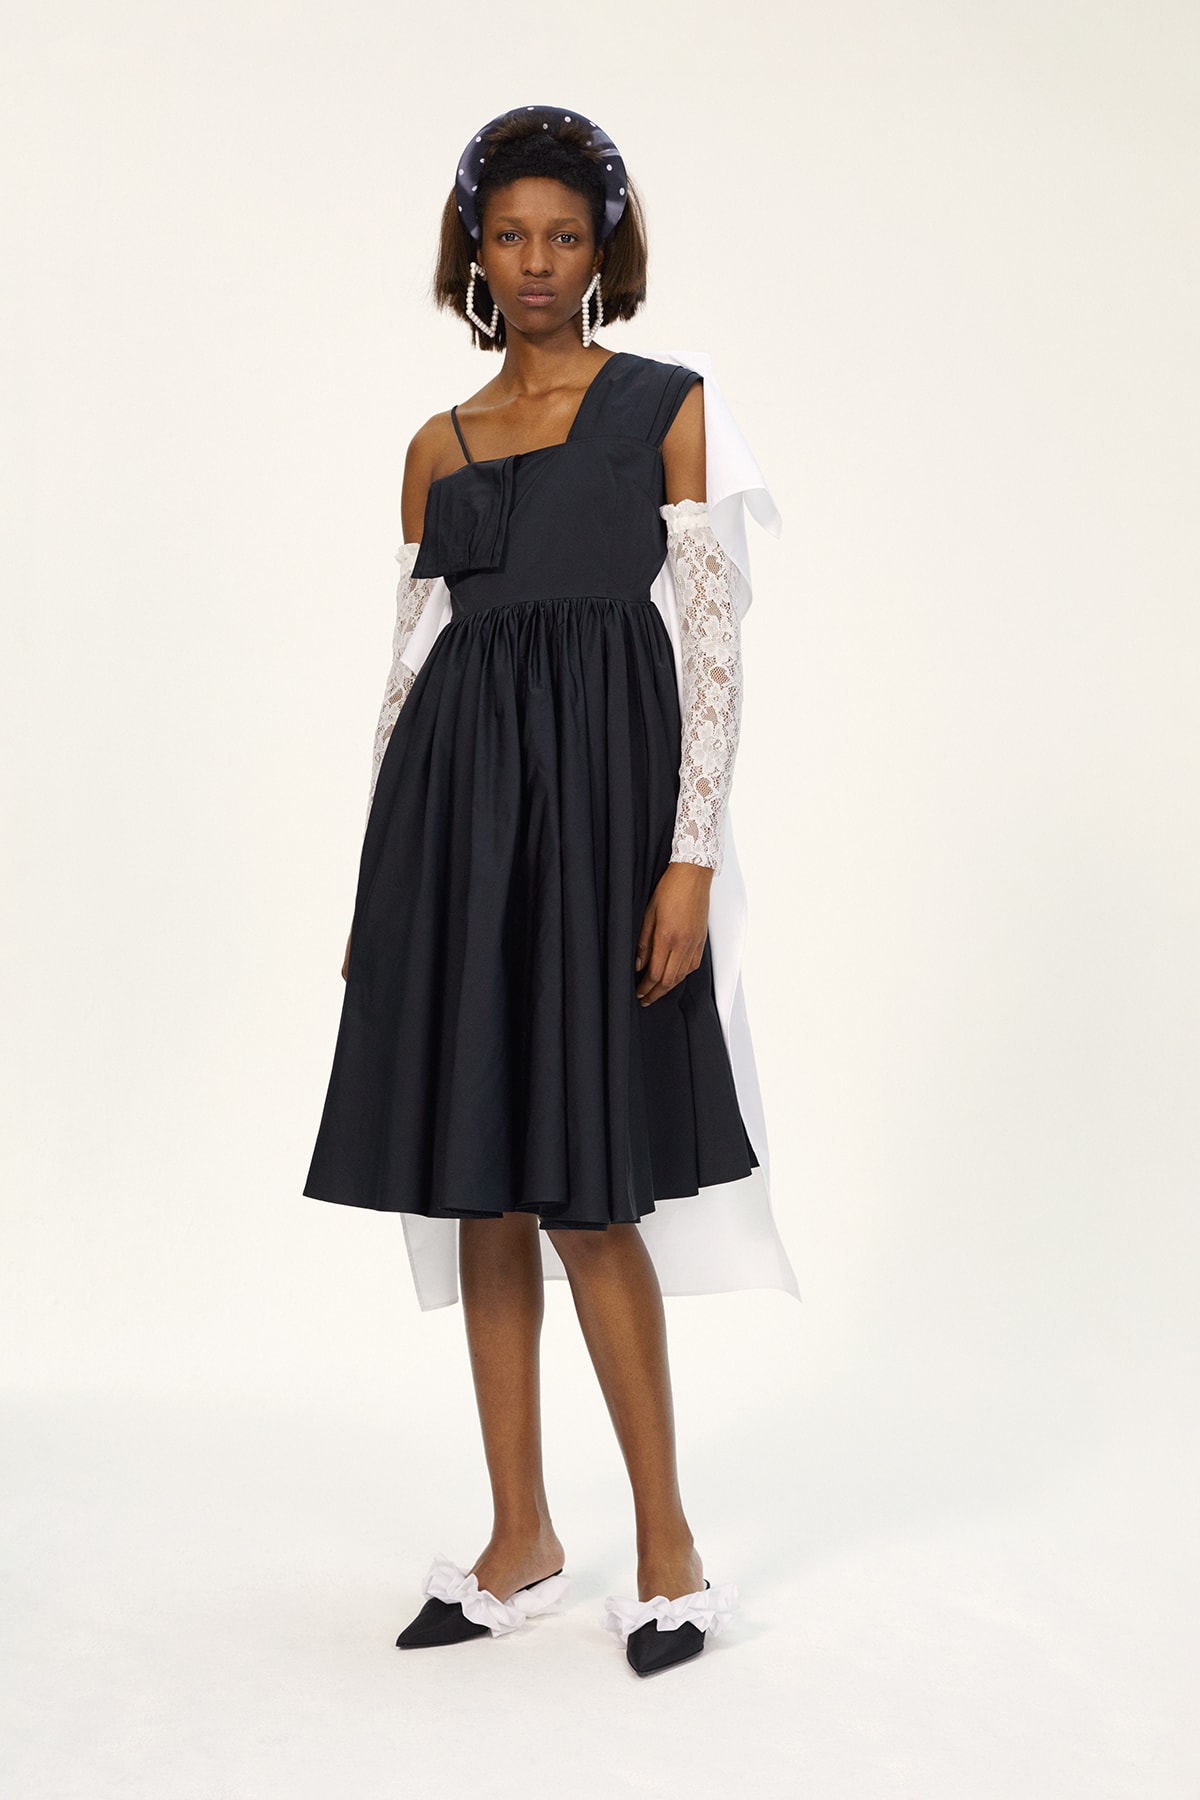 MM6 Maison Margiela Spring/Summer 2020 Collection Lookbook Black Ruffle Dress